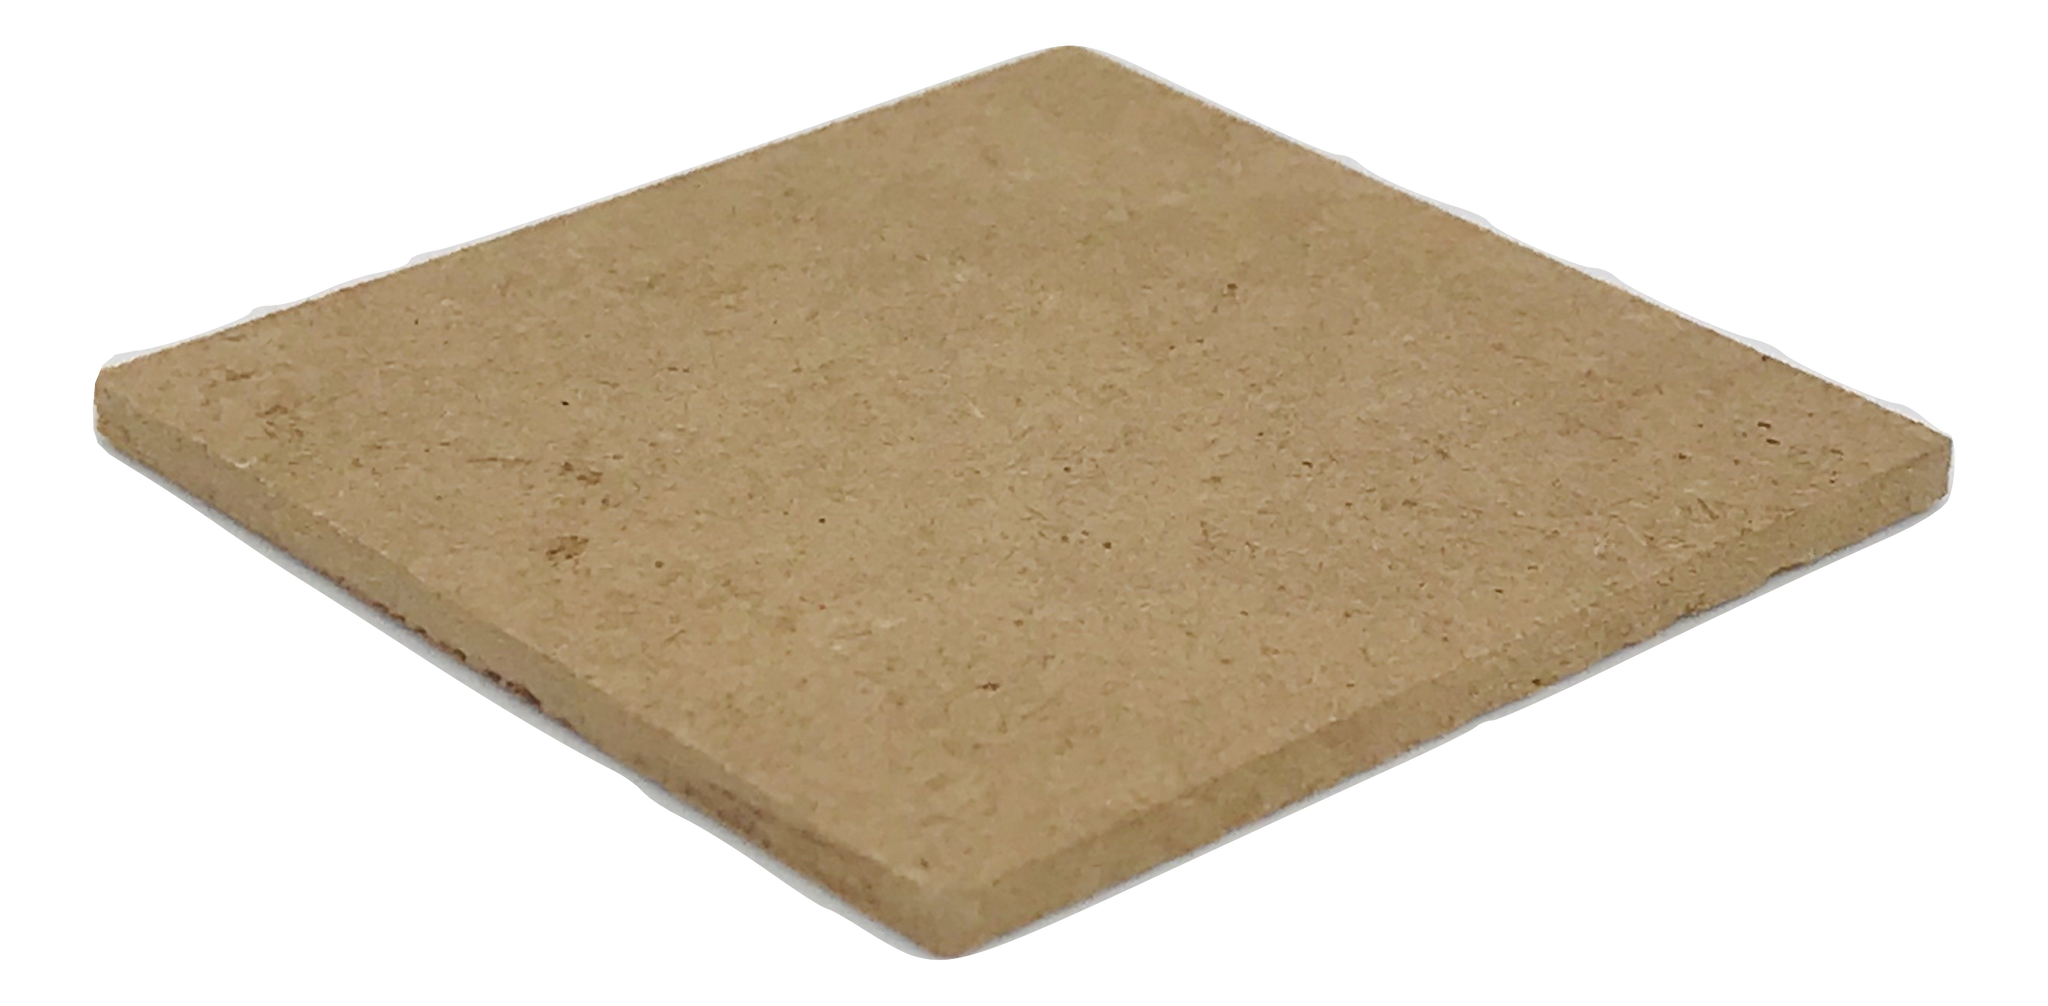 MDF Wood Board 3mm 1/8th inch MDF (Medium Density Fibreboard) Hardwood  Board (14 x 14in 6 Sheets)